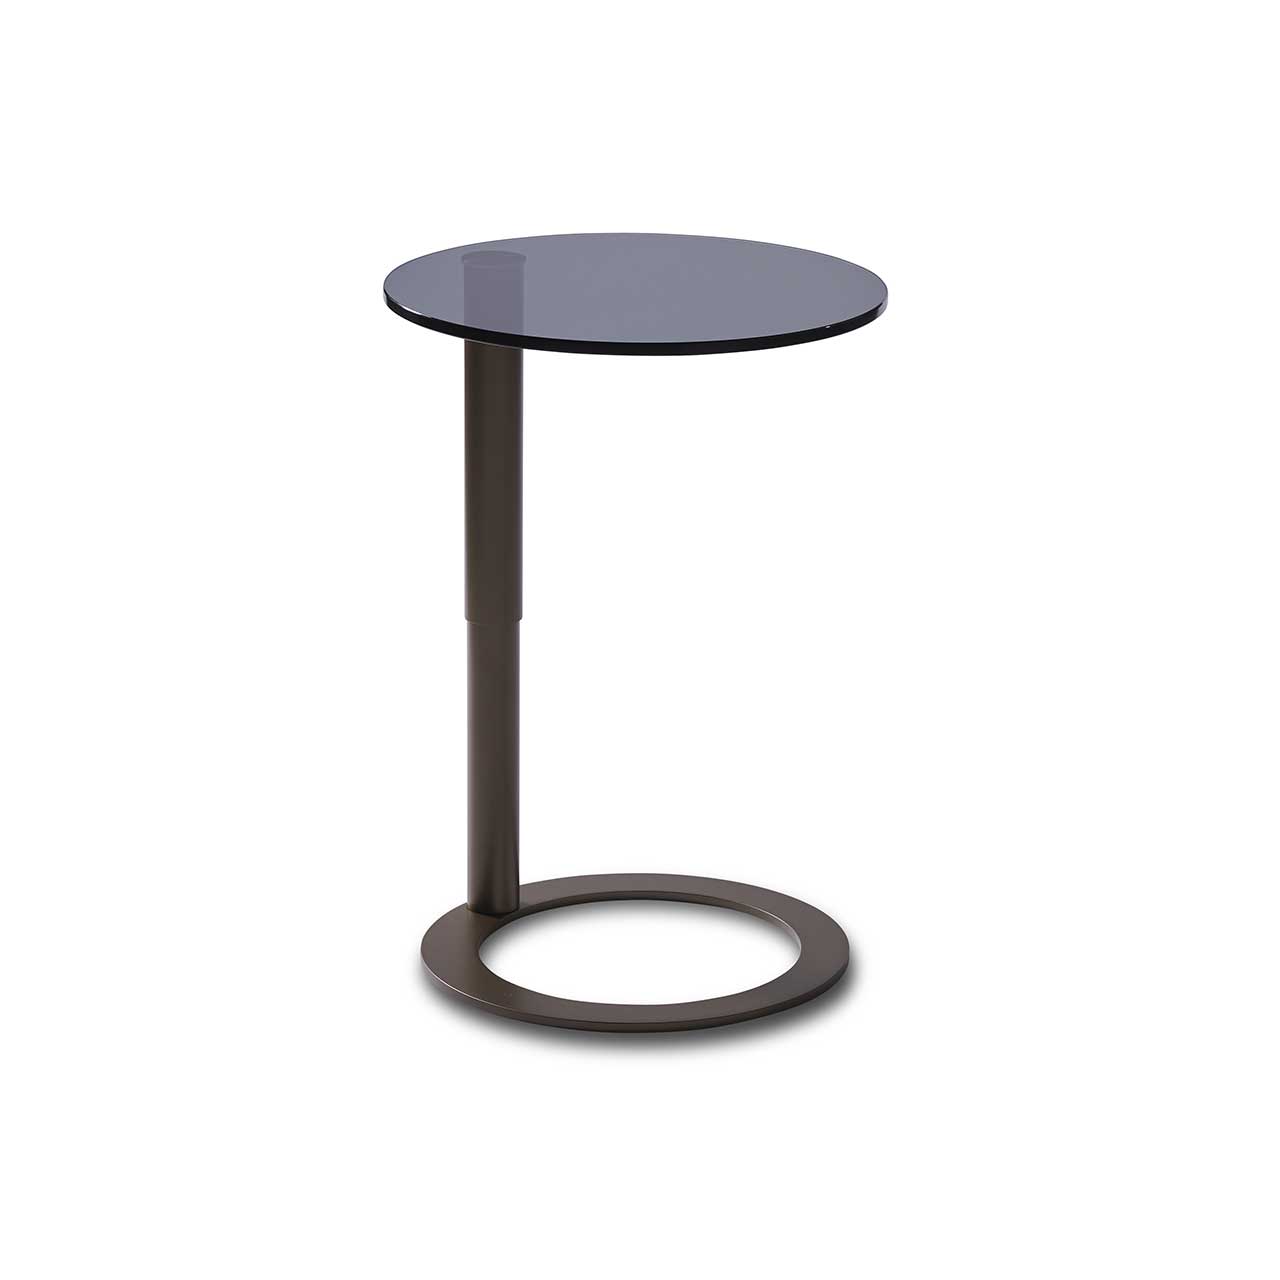 Ronald Schmitt – Beistelltisch Rondo K 441 – oben | Tischplatte Parsolglas grau, Metallgestell bronze